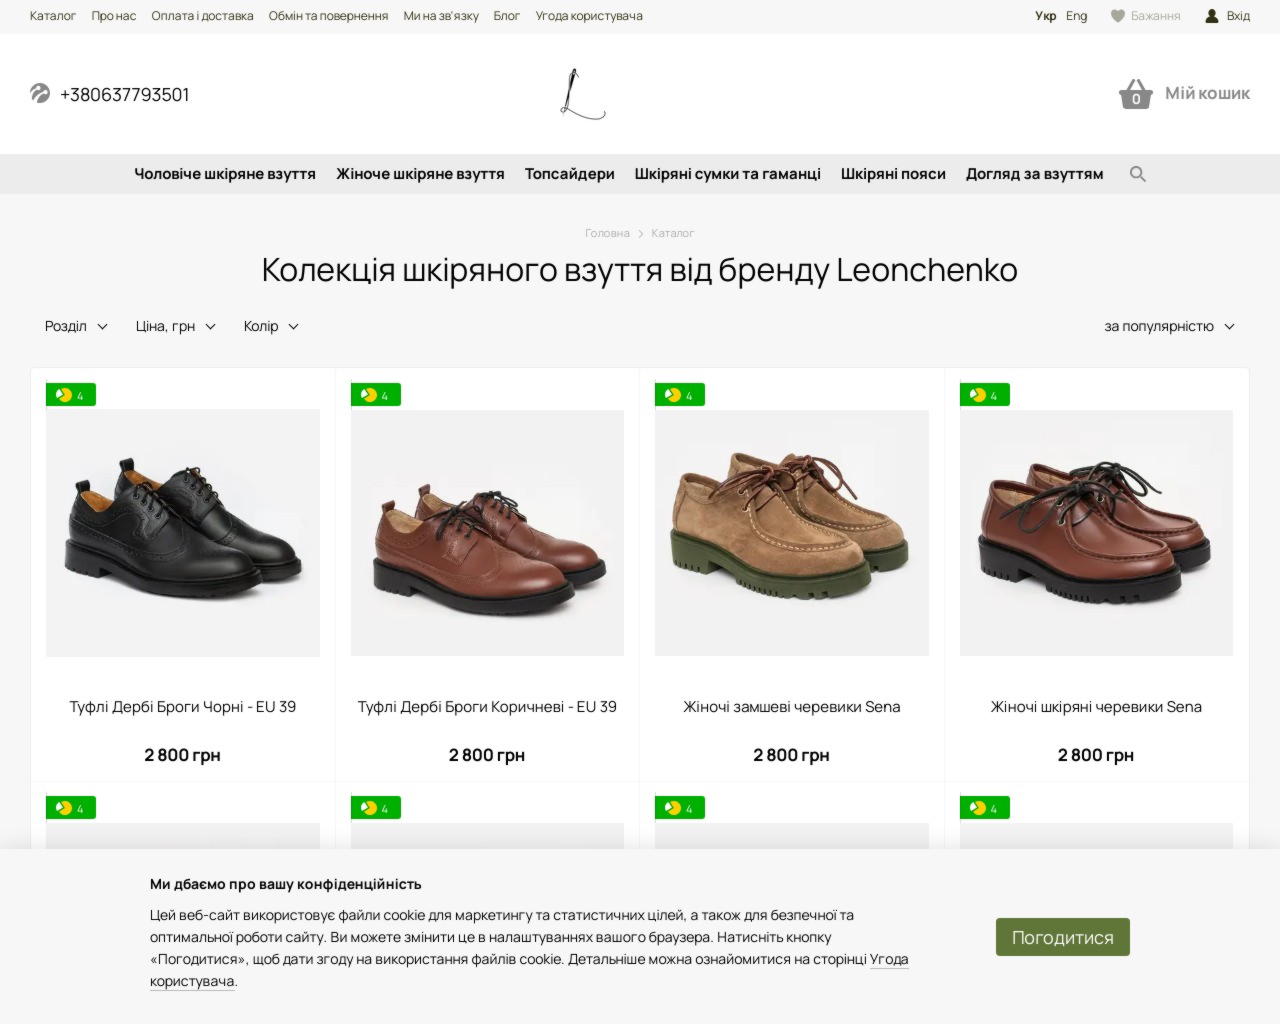 Изображение скриншота сайта - Leonchenko - крафтова майстерня з виробництва шкіряного взуття